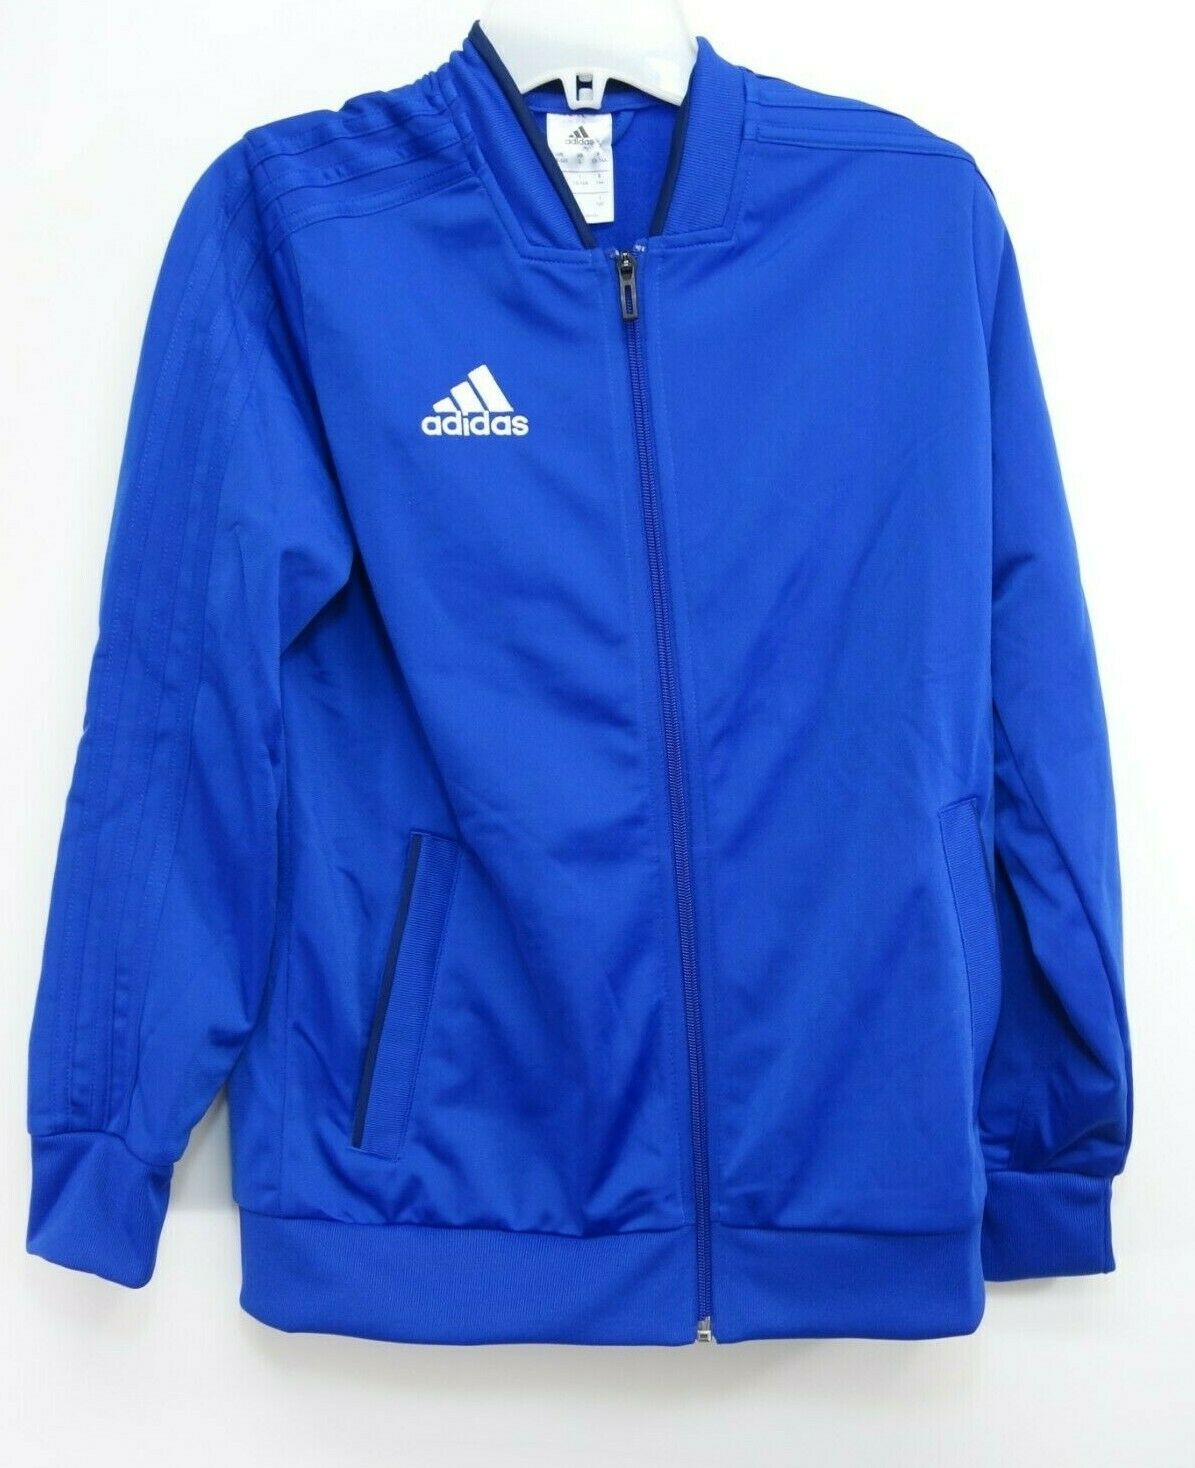 New Adidas Youth Condivo 18 Royal Blue Activewear Zip Up Athletic Jacket Large